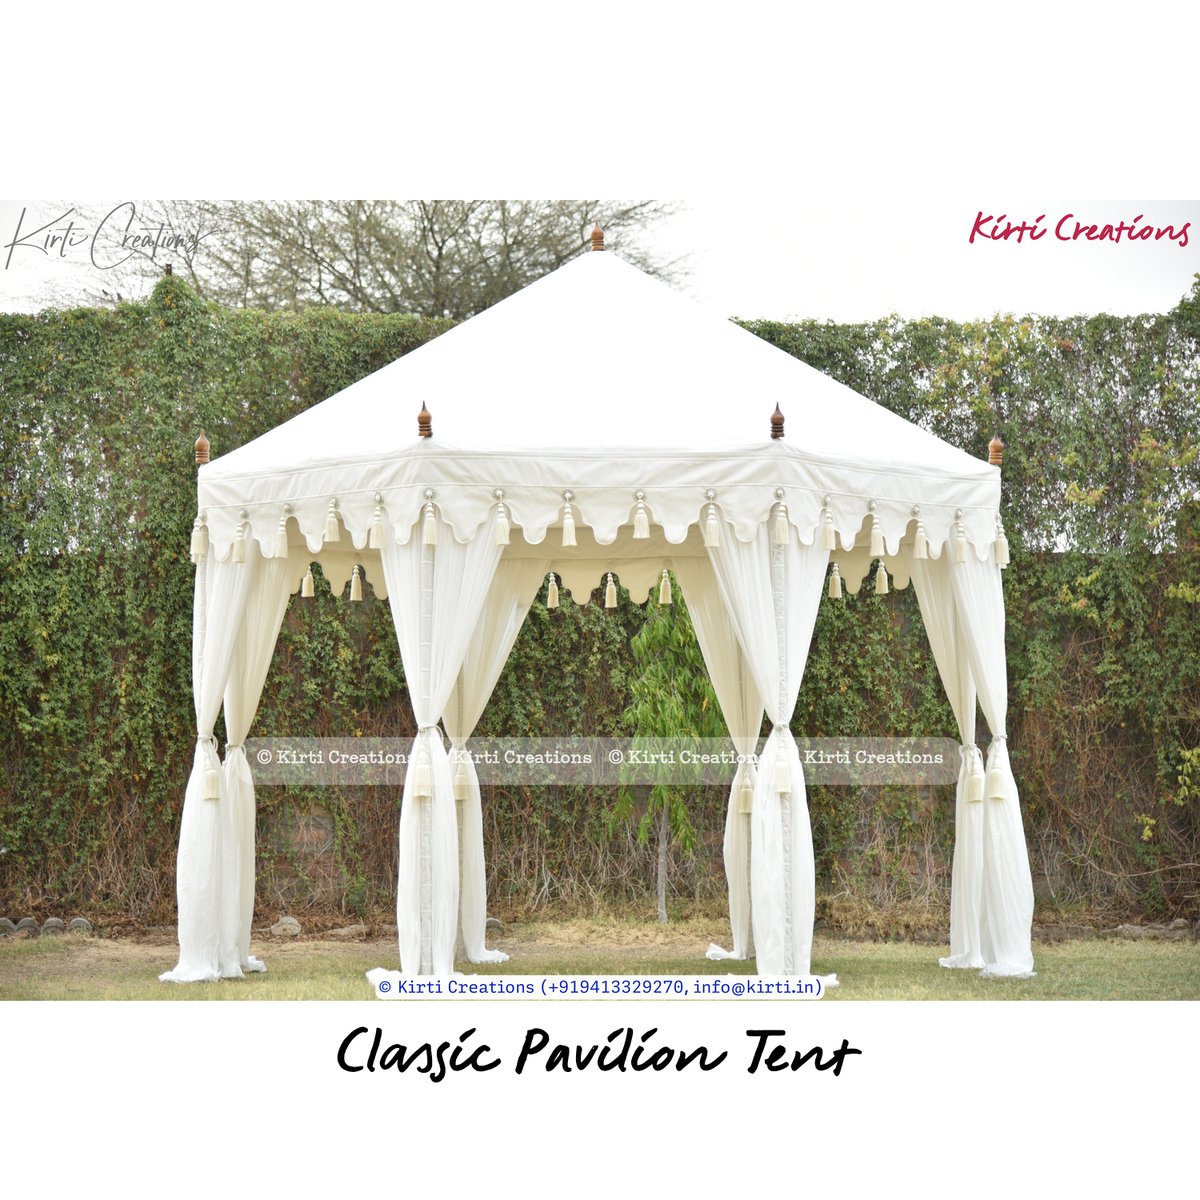 Classic Pavilion Tent
.
#kirtitents #rajtent #rajtents #maharajatent #royaltent #luxurytent #indiantent #weddingtent #gardentent #weddingplanner
.
Visit rajtent.com